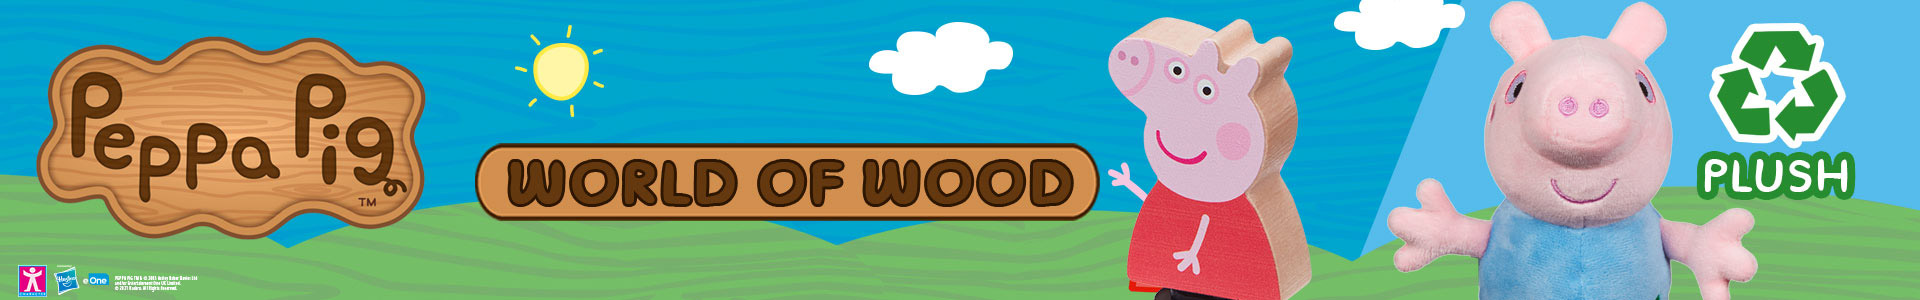 Peppa Pig World of Wood